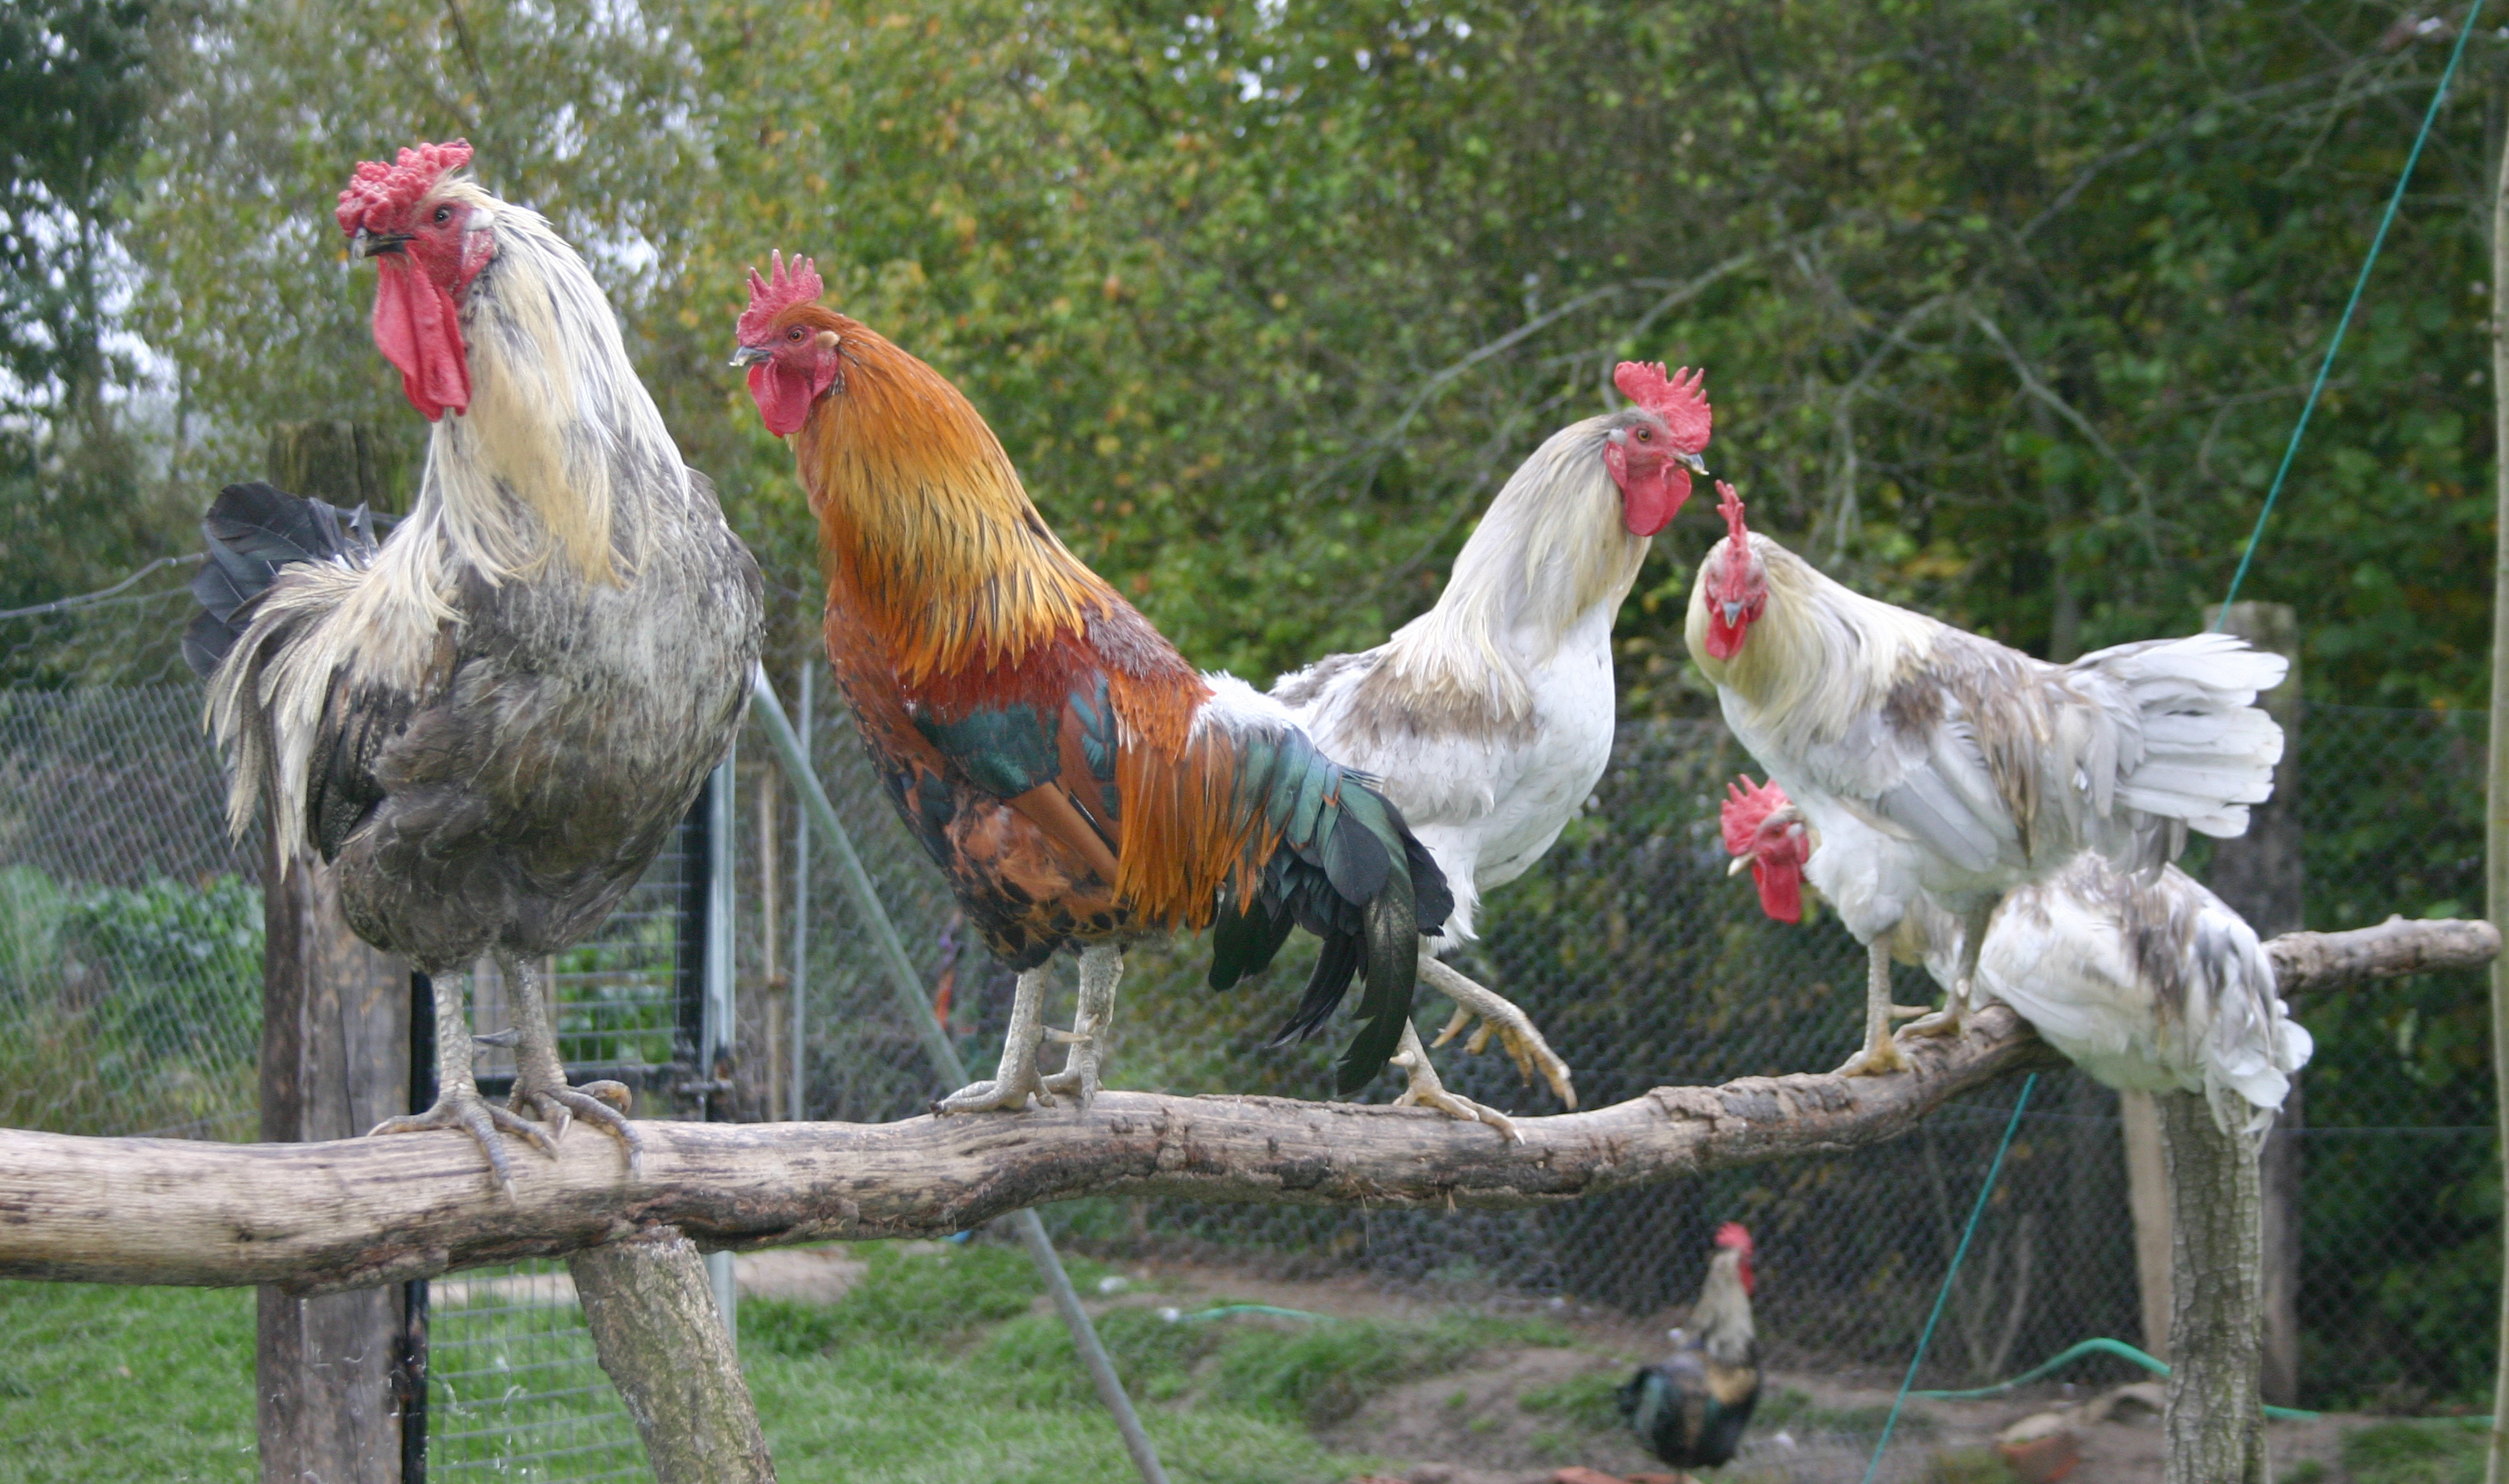 gallos de León, origen gallos de León, plumas pesca, coq de León, galllo indio, gallo pardo